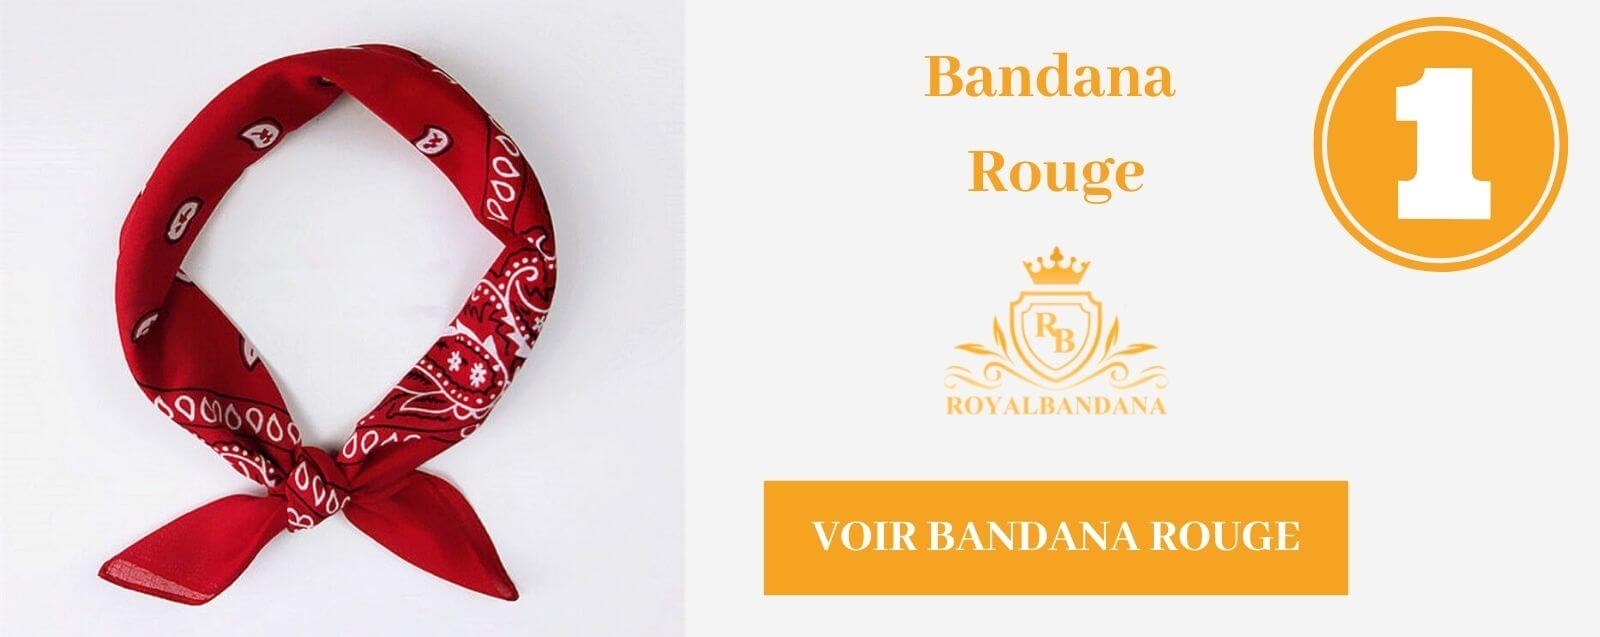 top 1 bandana rouge royalbandana